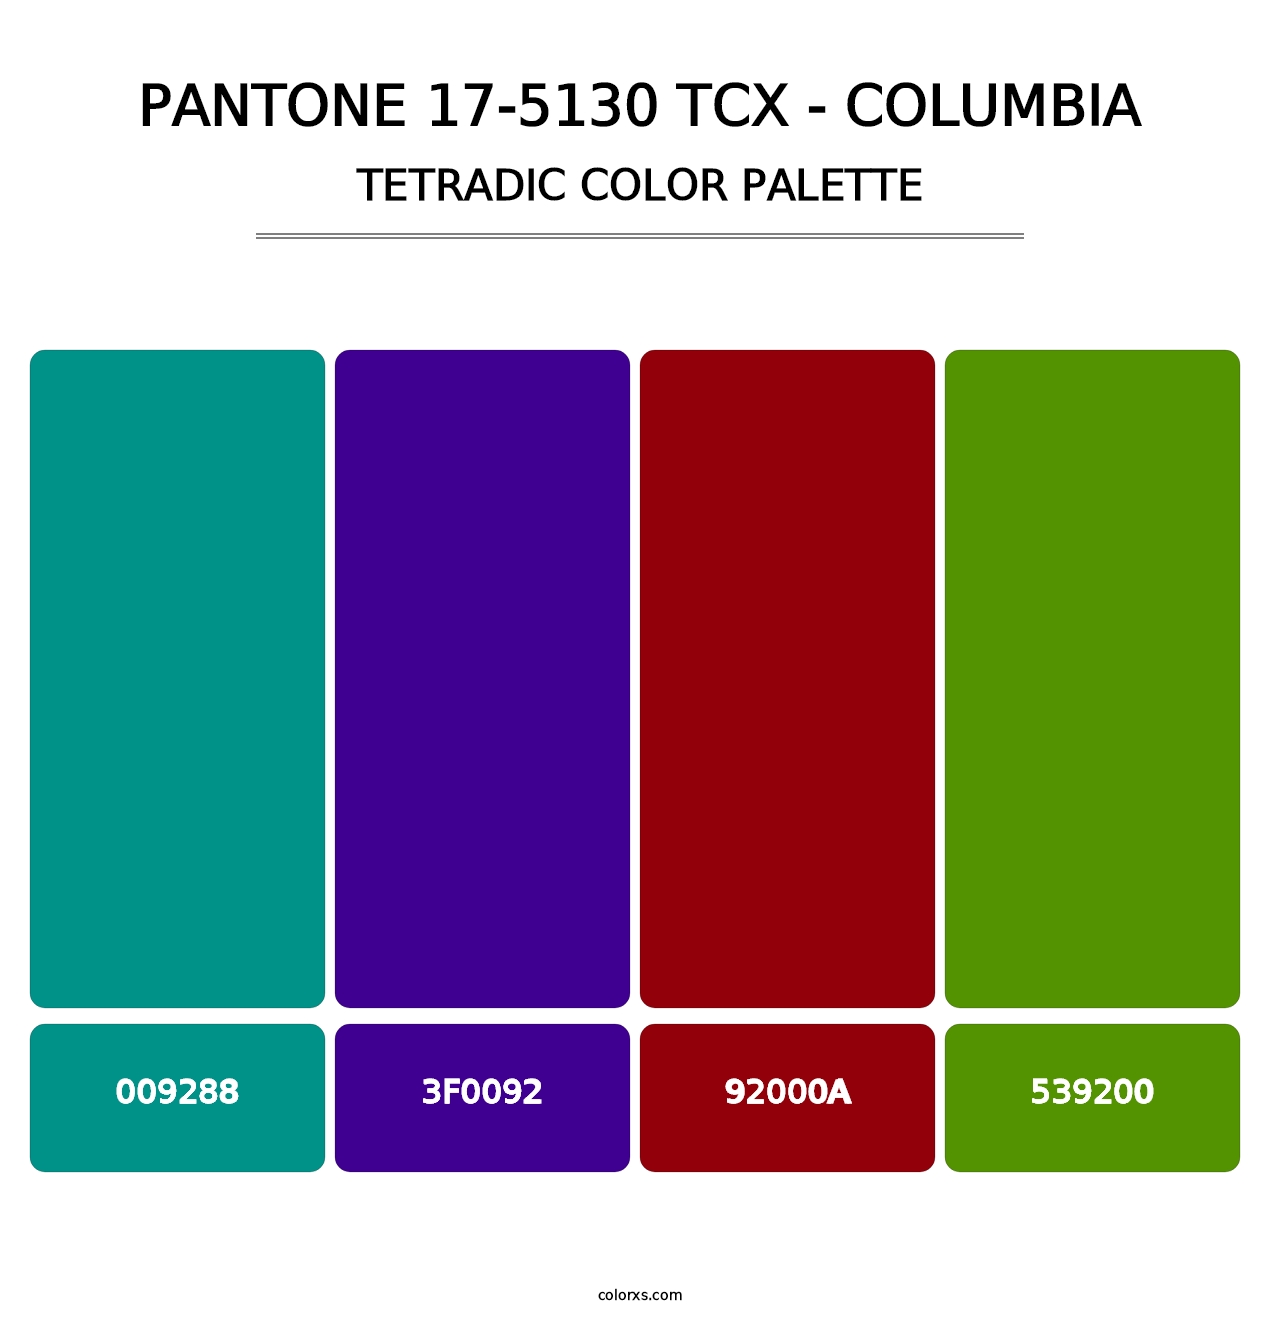 PANTONE 17-5130 TCX - Columbia - Tetradic Color Palette